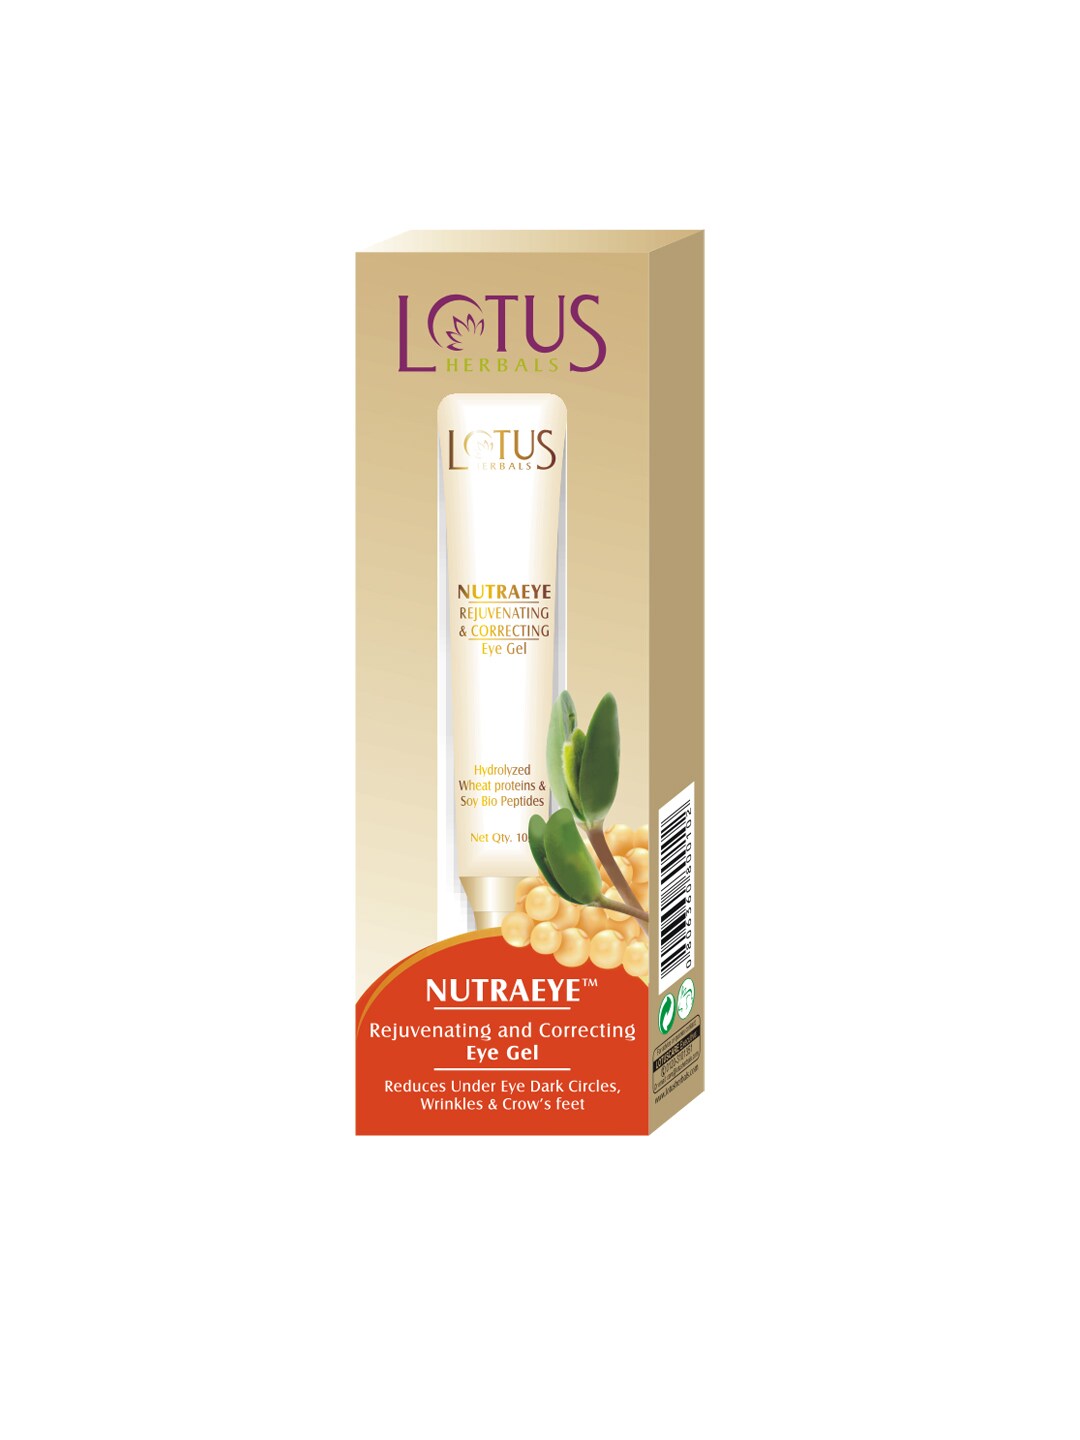 Lotus Herbals Nutraeye Rejuvenating & Correcting Eye Gel Eye Cream